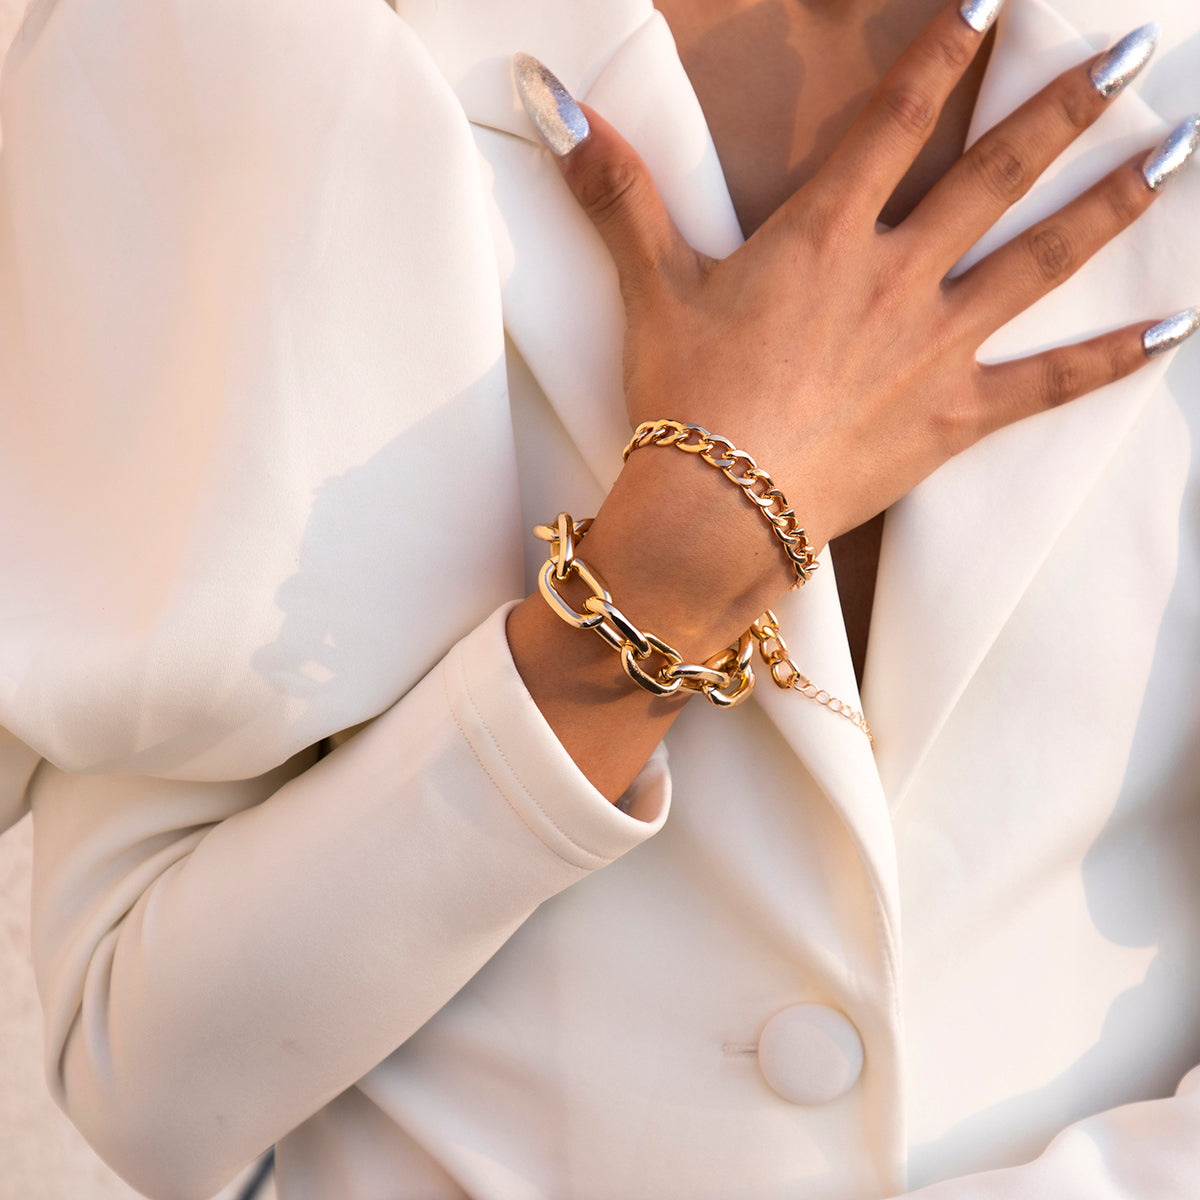 Cartier Open Love Bracelet 18K Rose Gold Size 17 | eBay